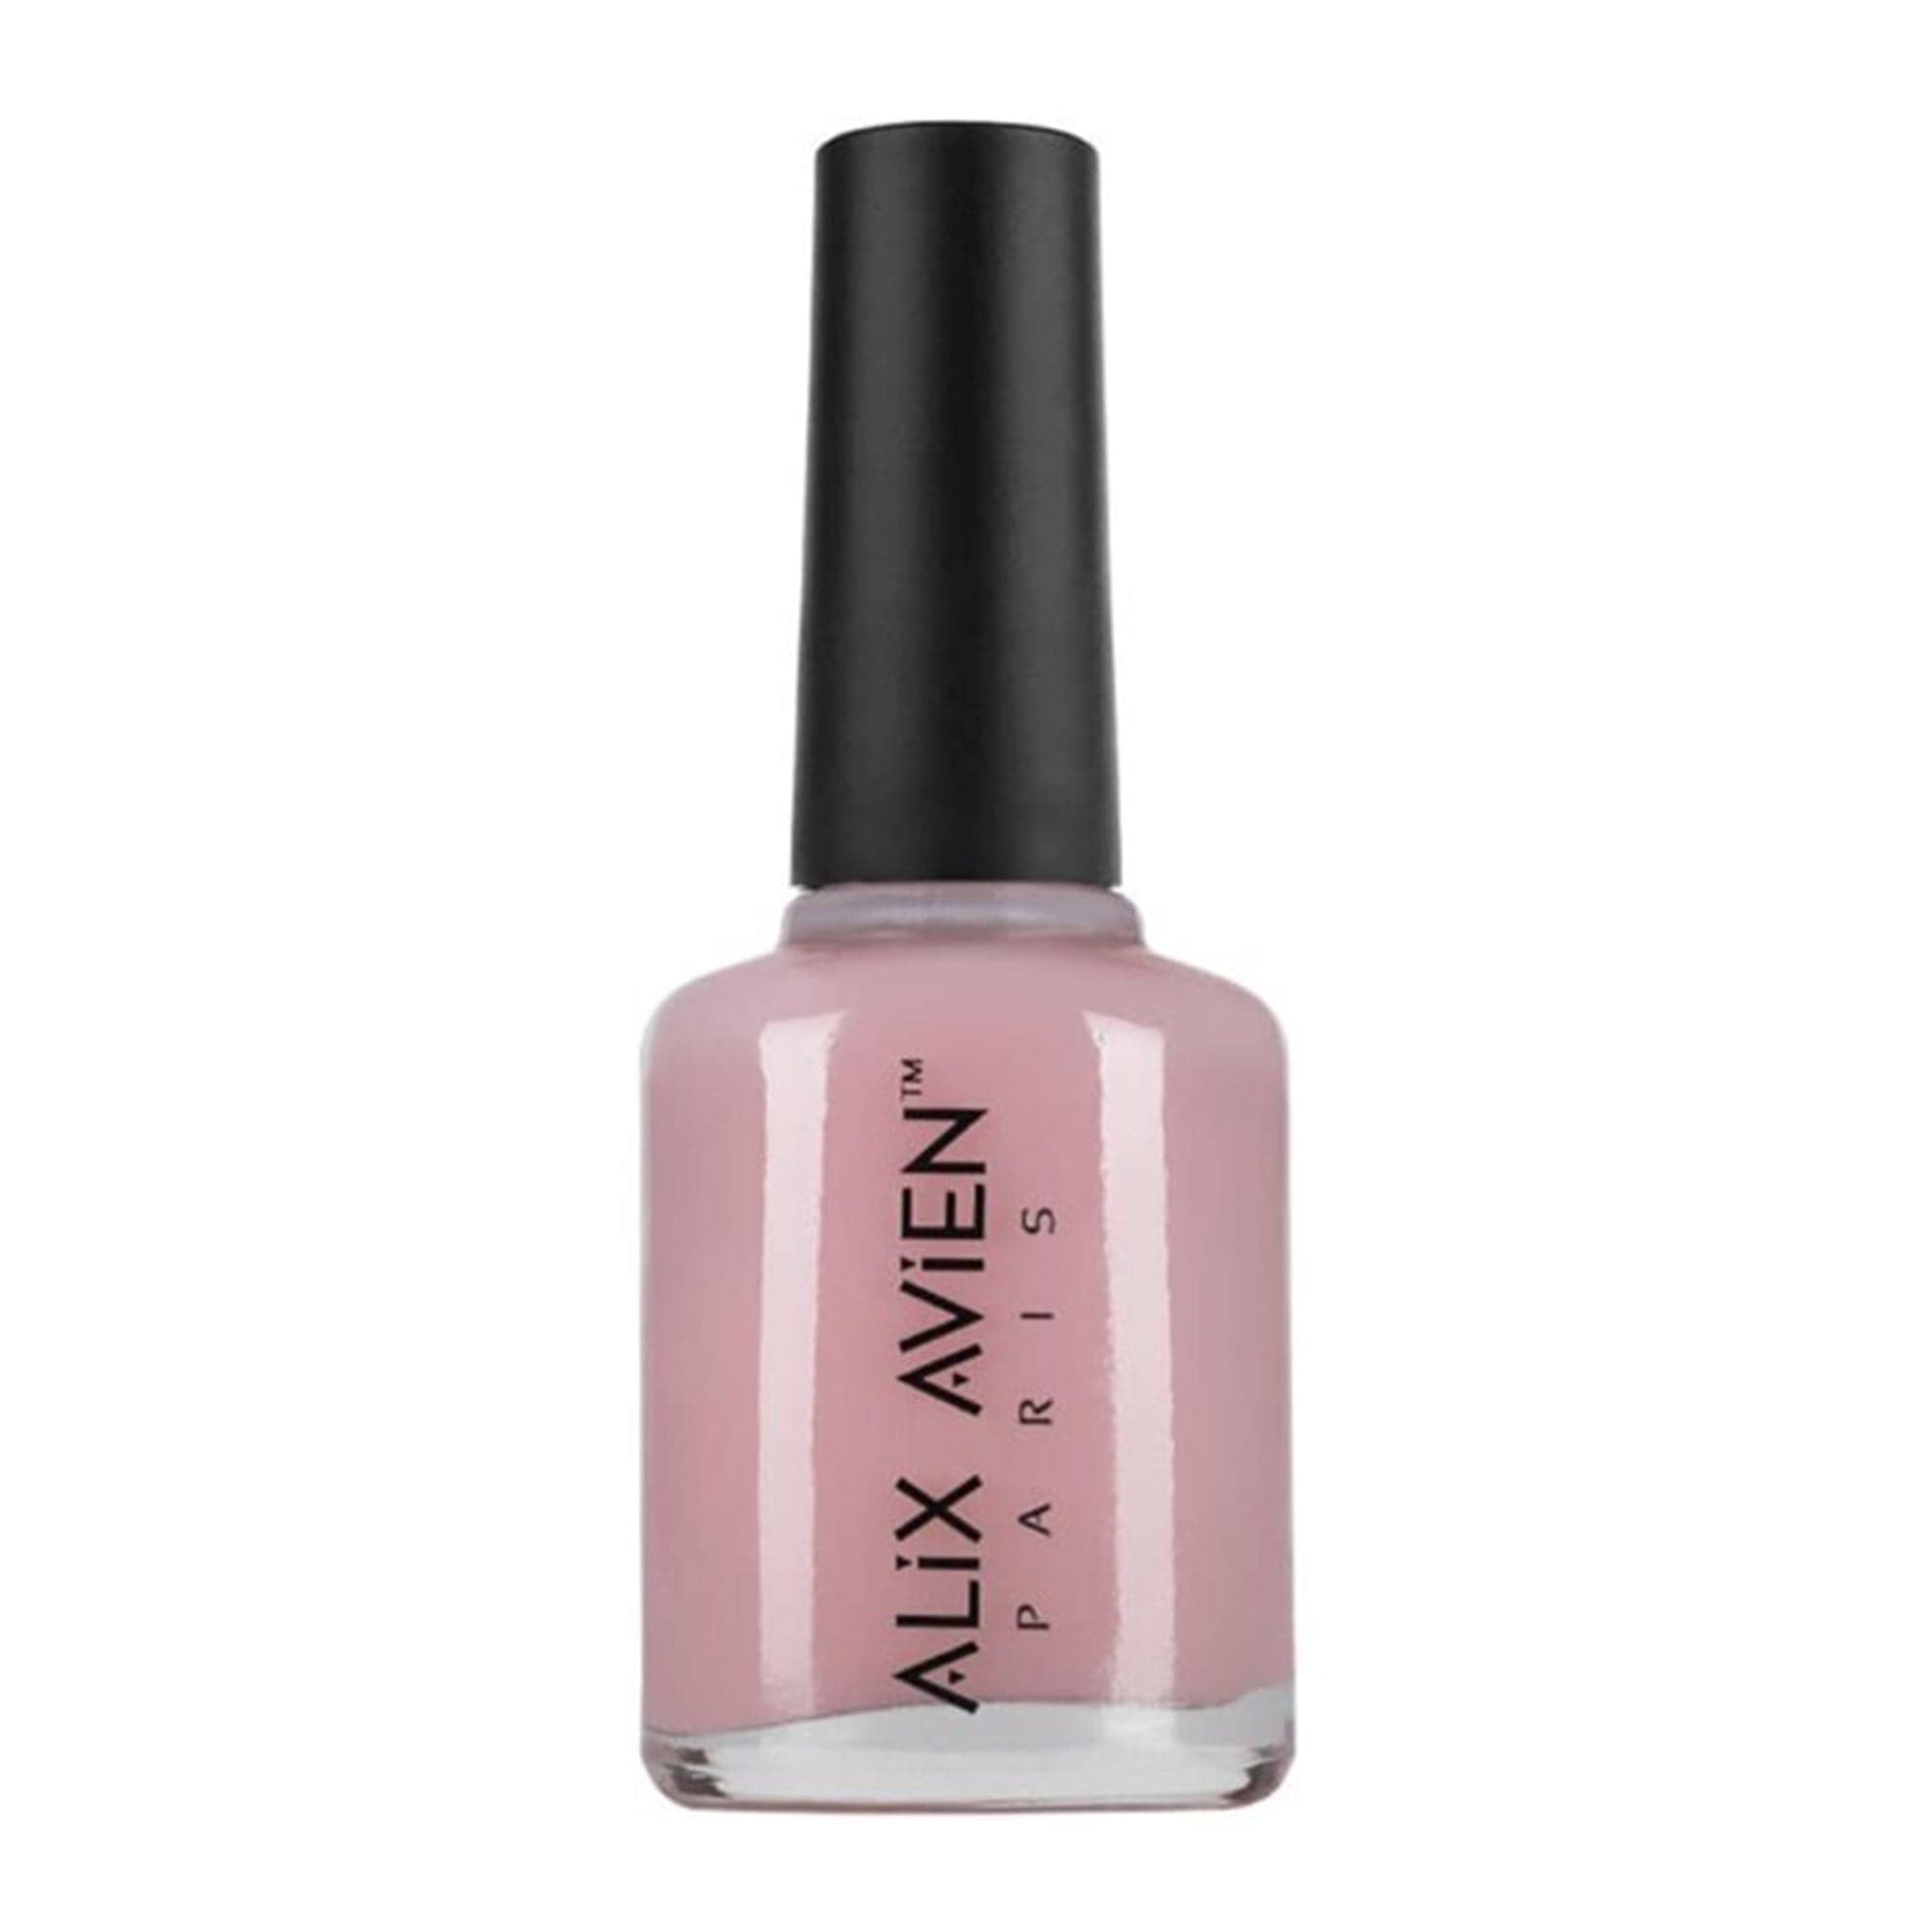 Alix Avien - Nail Polish No.05 (Slight Pink) - Eson Direct